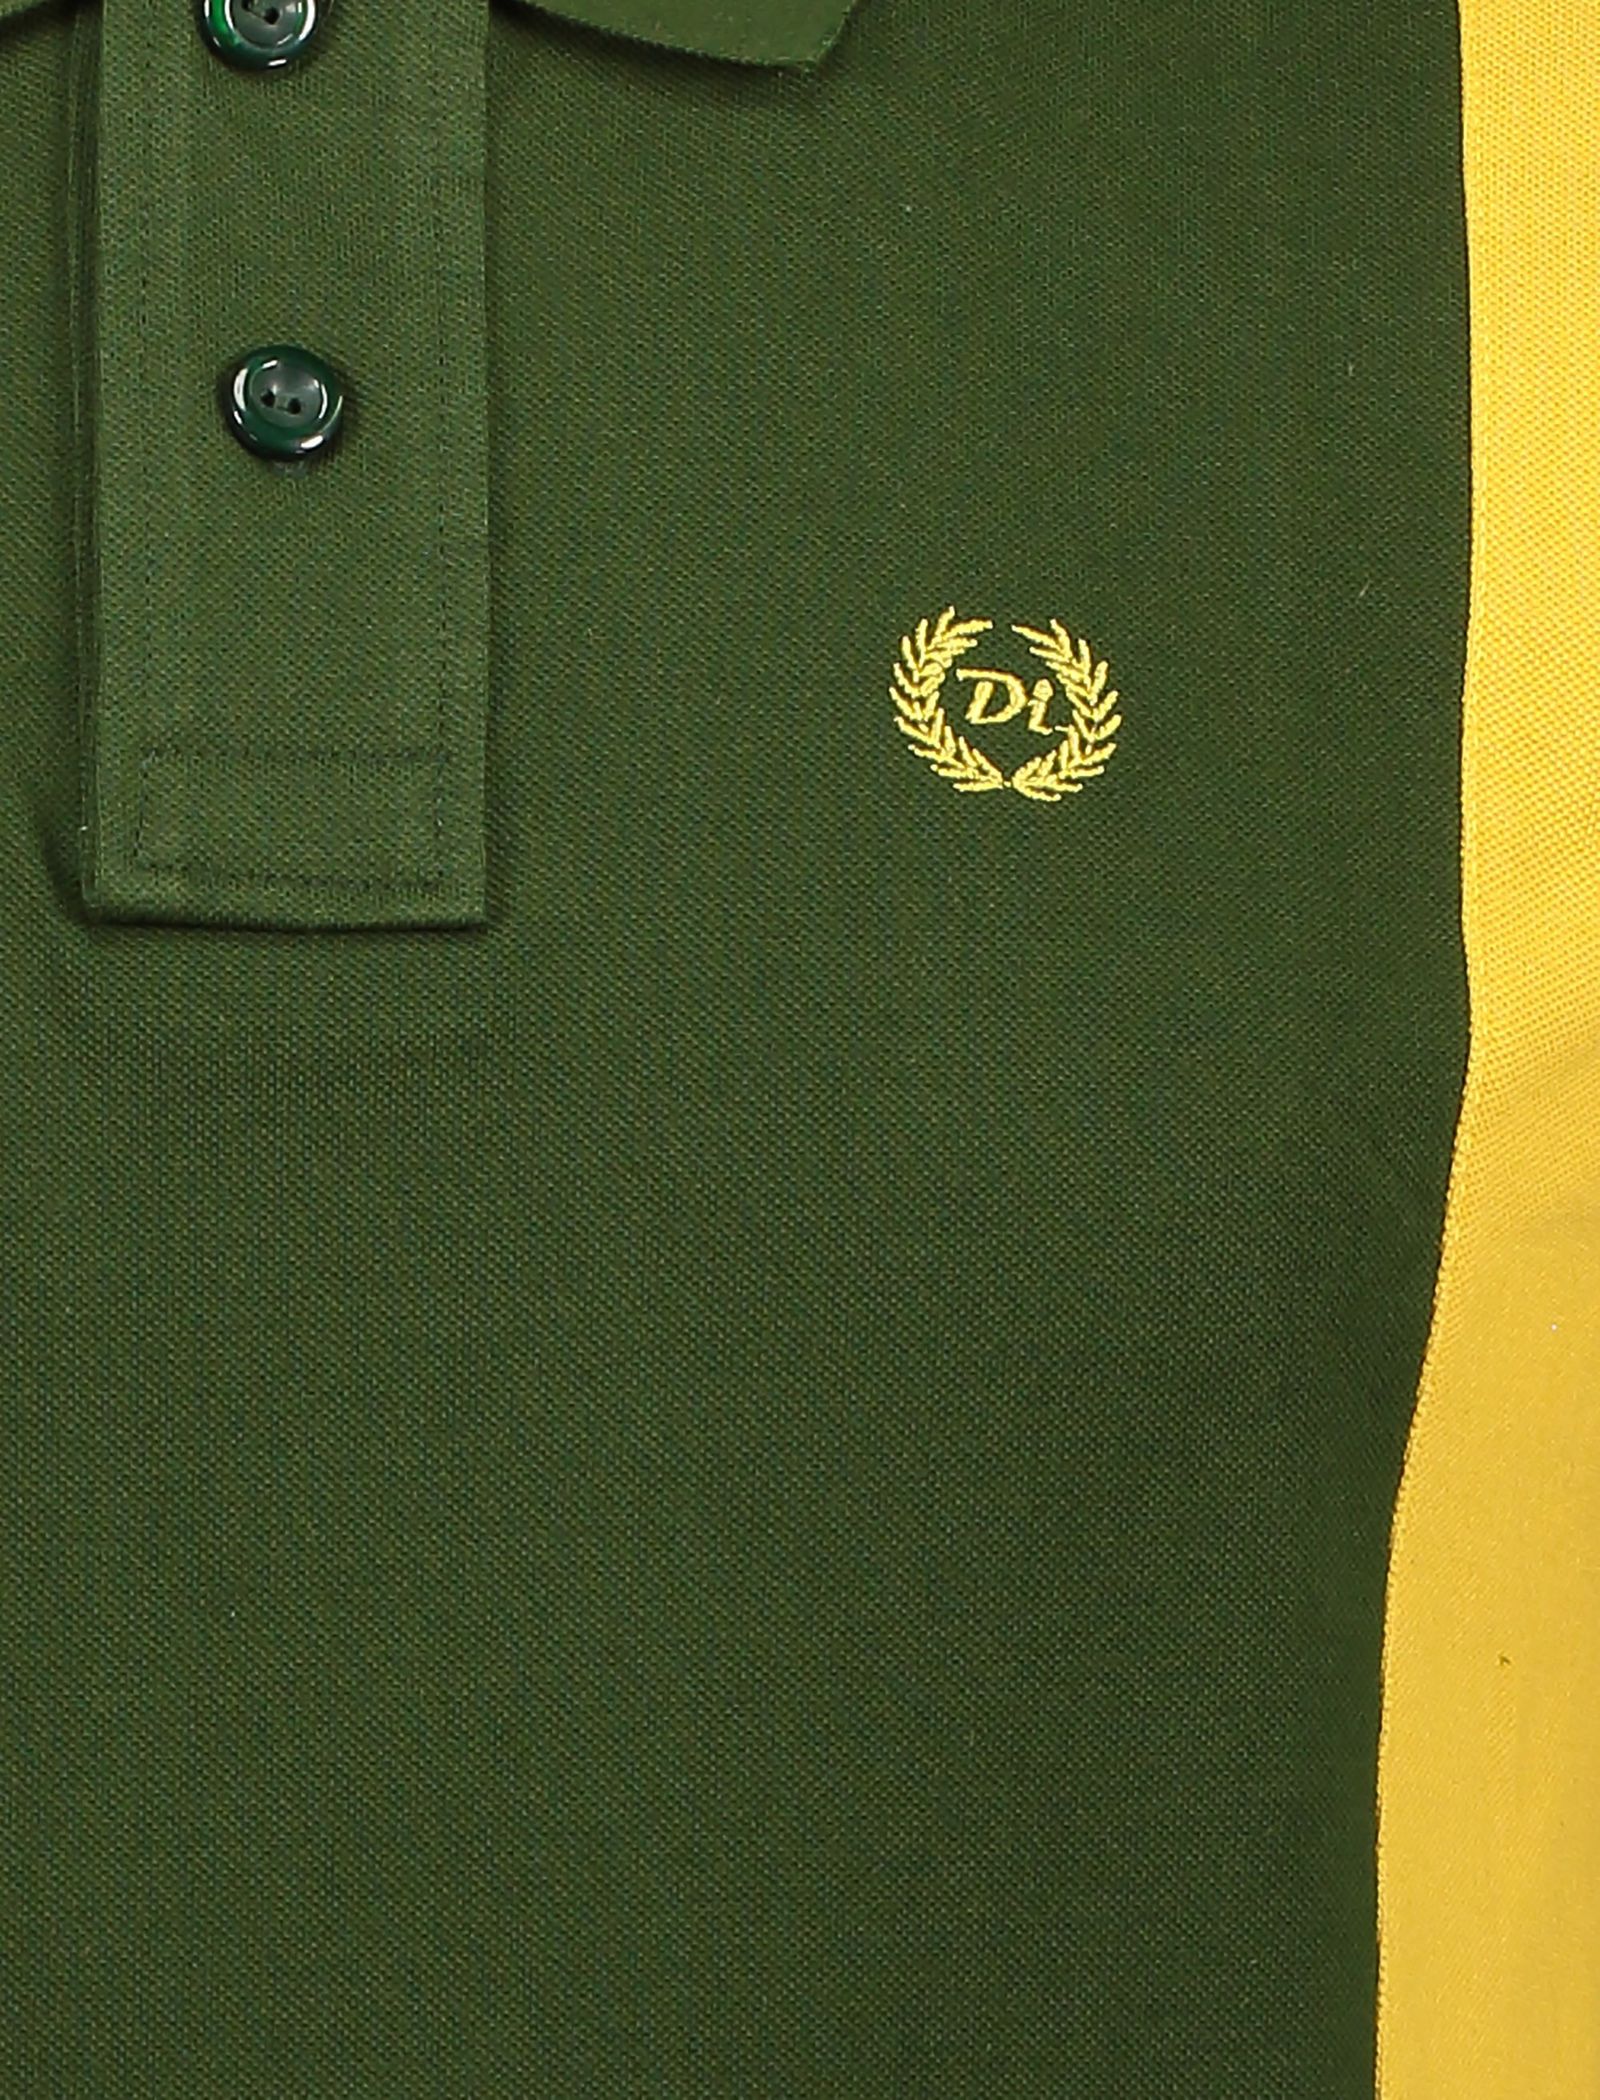 پولوشرت آستین کوتاه مردانه - درفش - سبز/نارنجي - 5